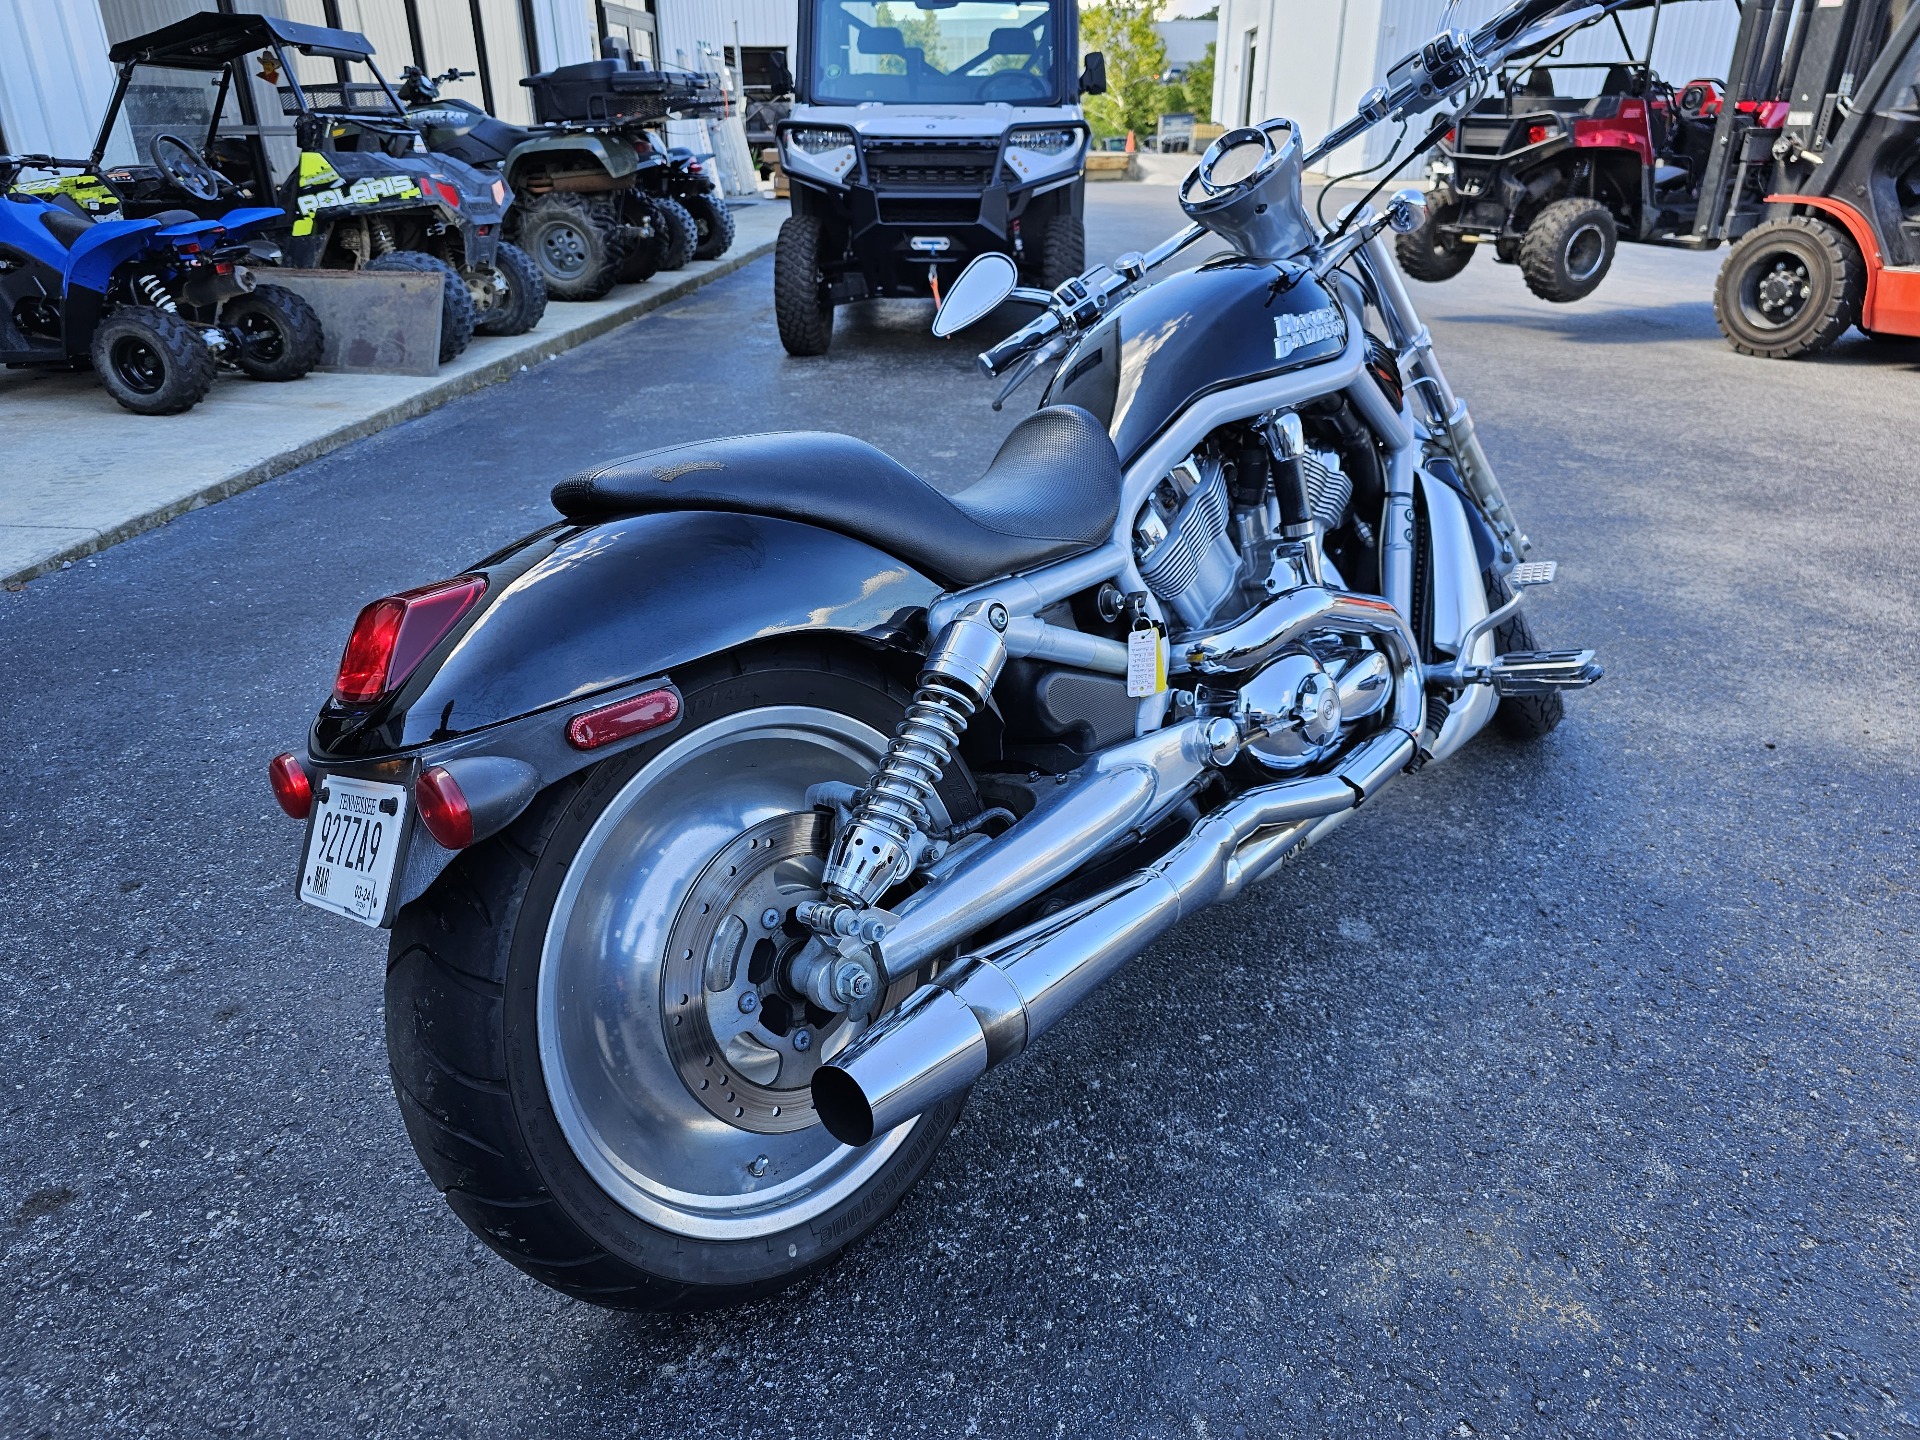 2002 Harley-Davidson VRSCA  V-Rod® in Clinton, Tennessee - Photo 6